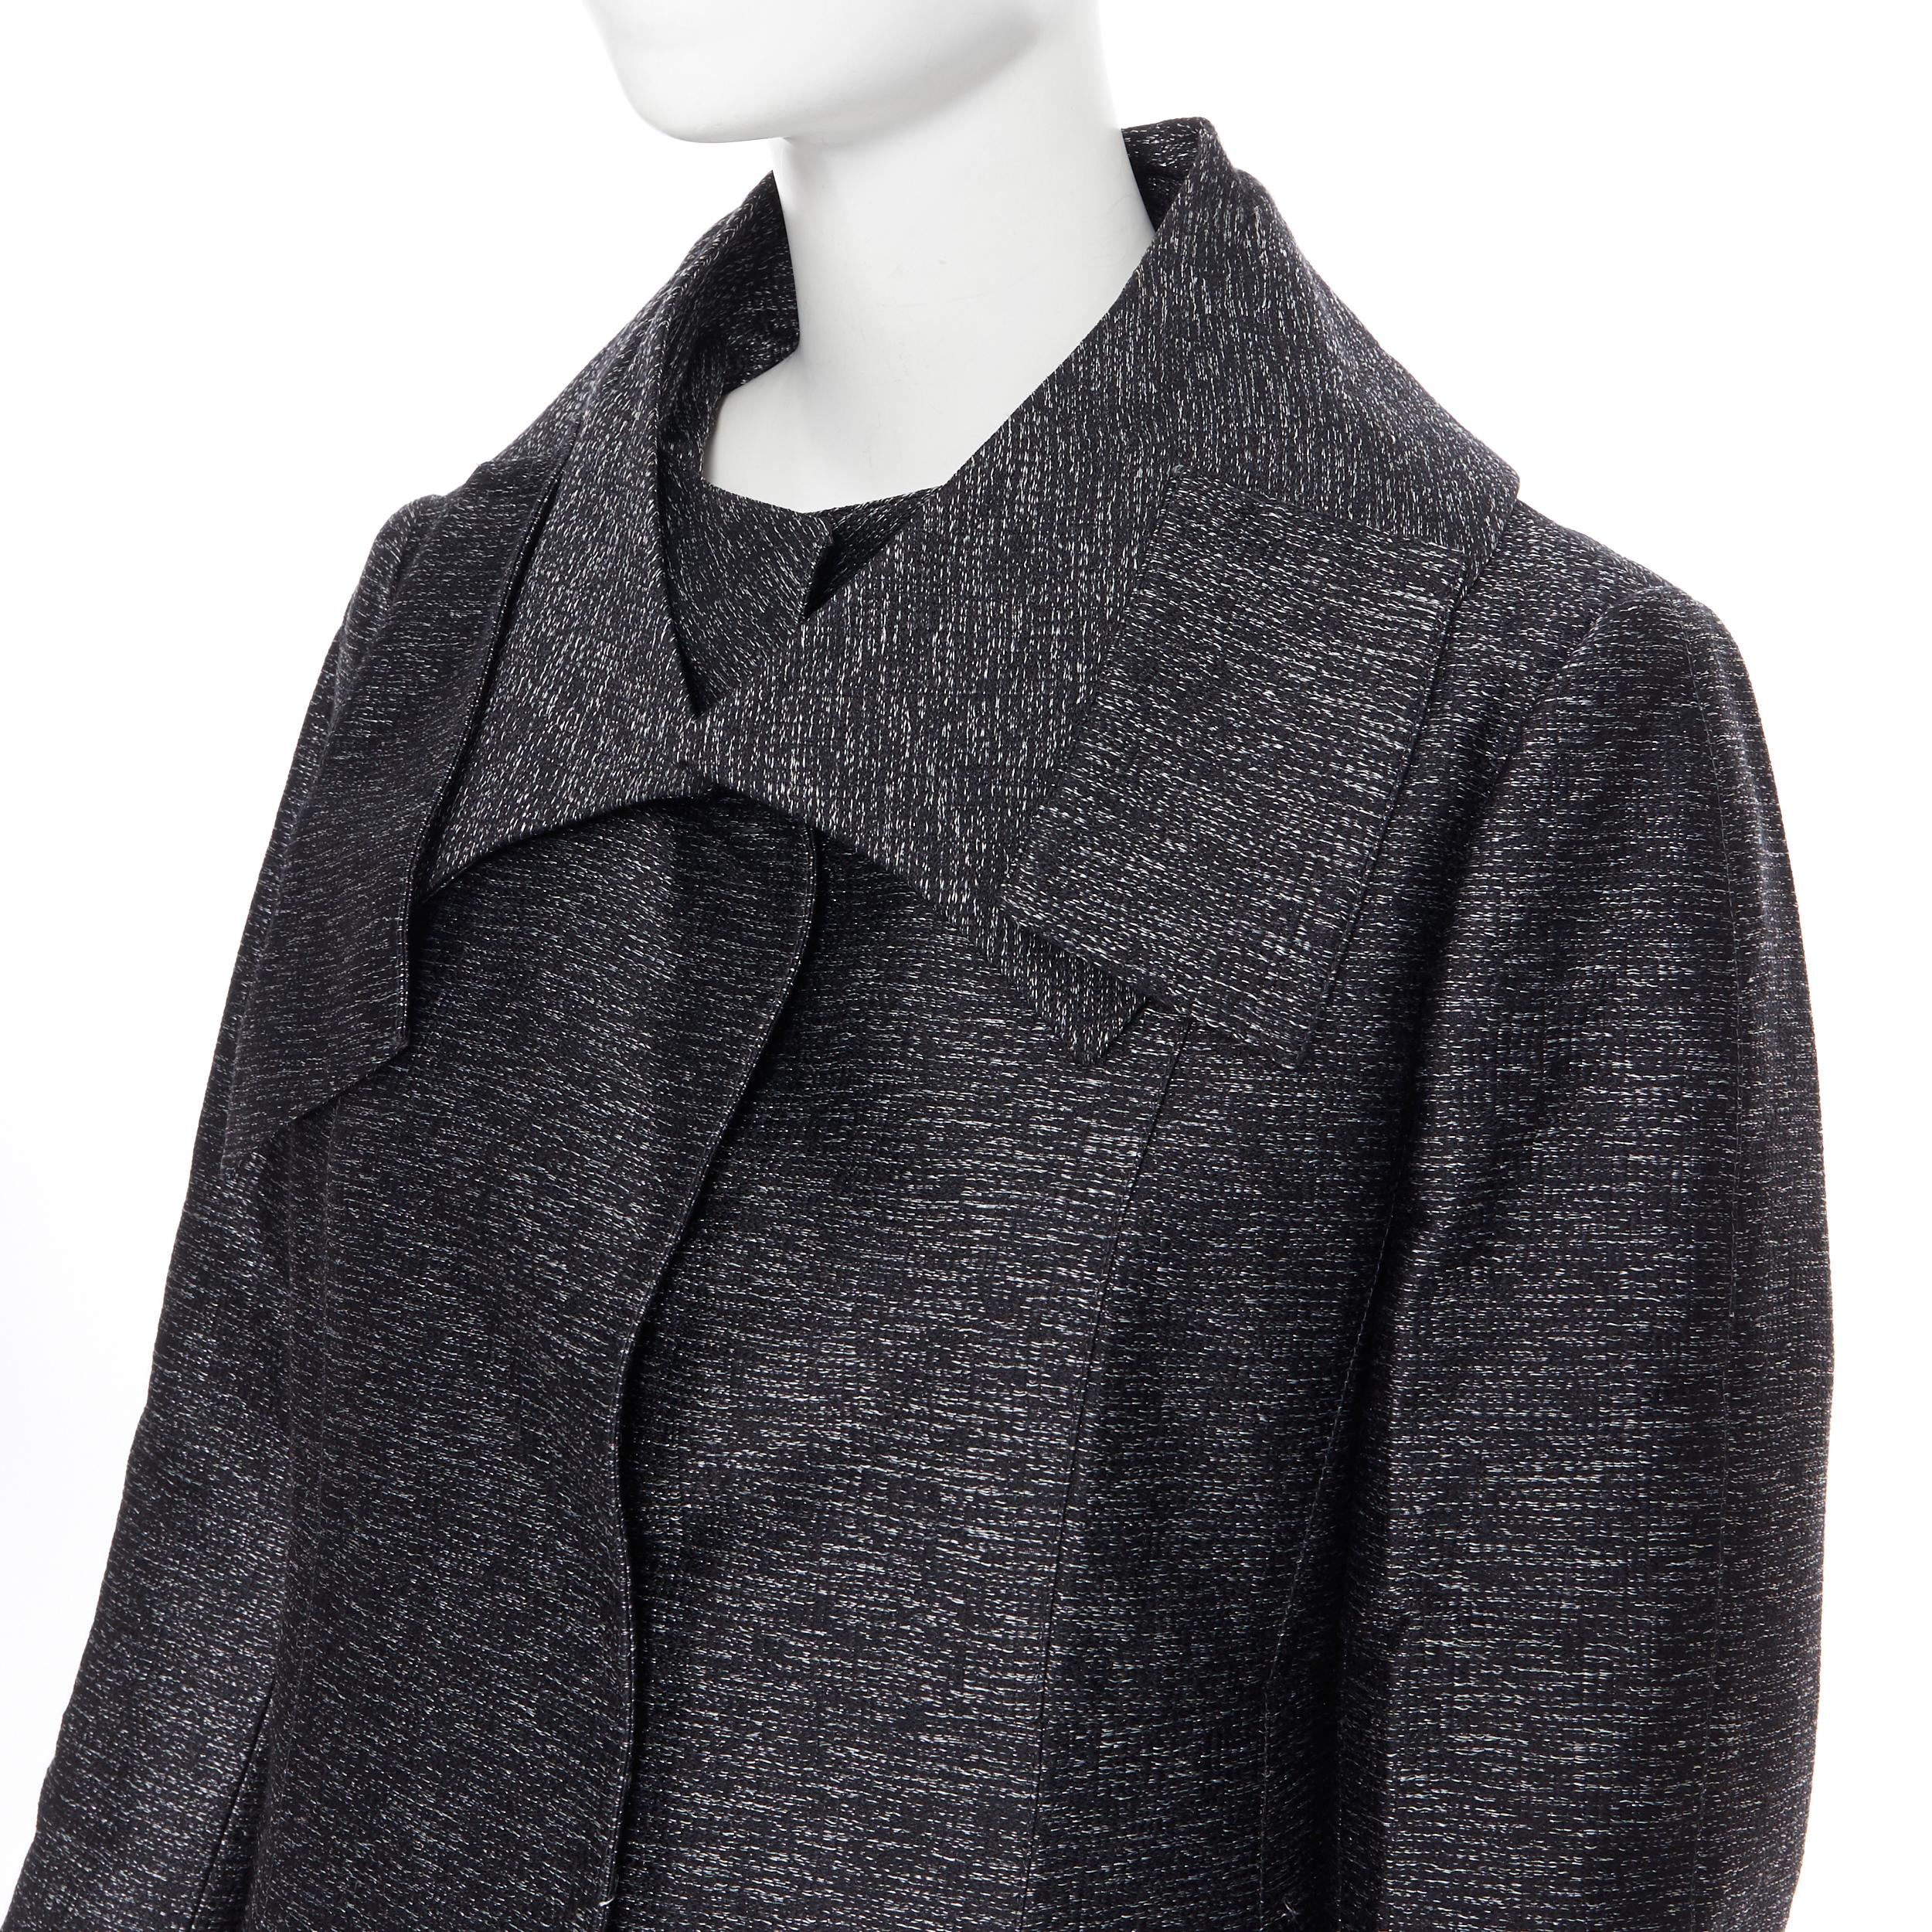 CHRISTIAN DIOR RAF melange grey silk wool irregular collar A-line coat FR42
Brand: Christian Dior
Designer: Raf Simons
Model Name / Style: A-line coat
Material: Silk, wool
Color: Grey
Pattern: Solid
Closure: Snap
Extra Detail: Irregular asymmetric